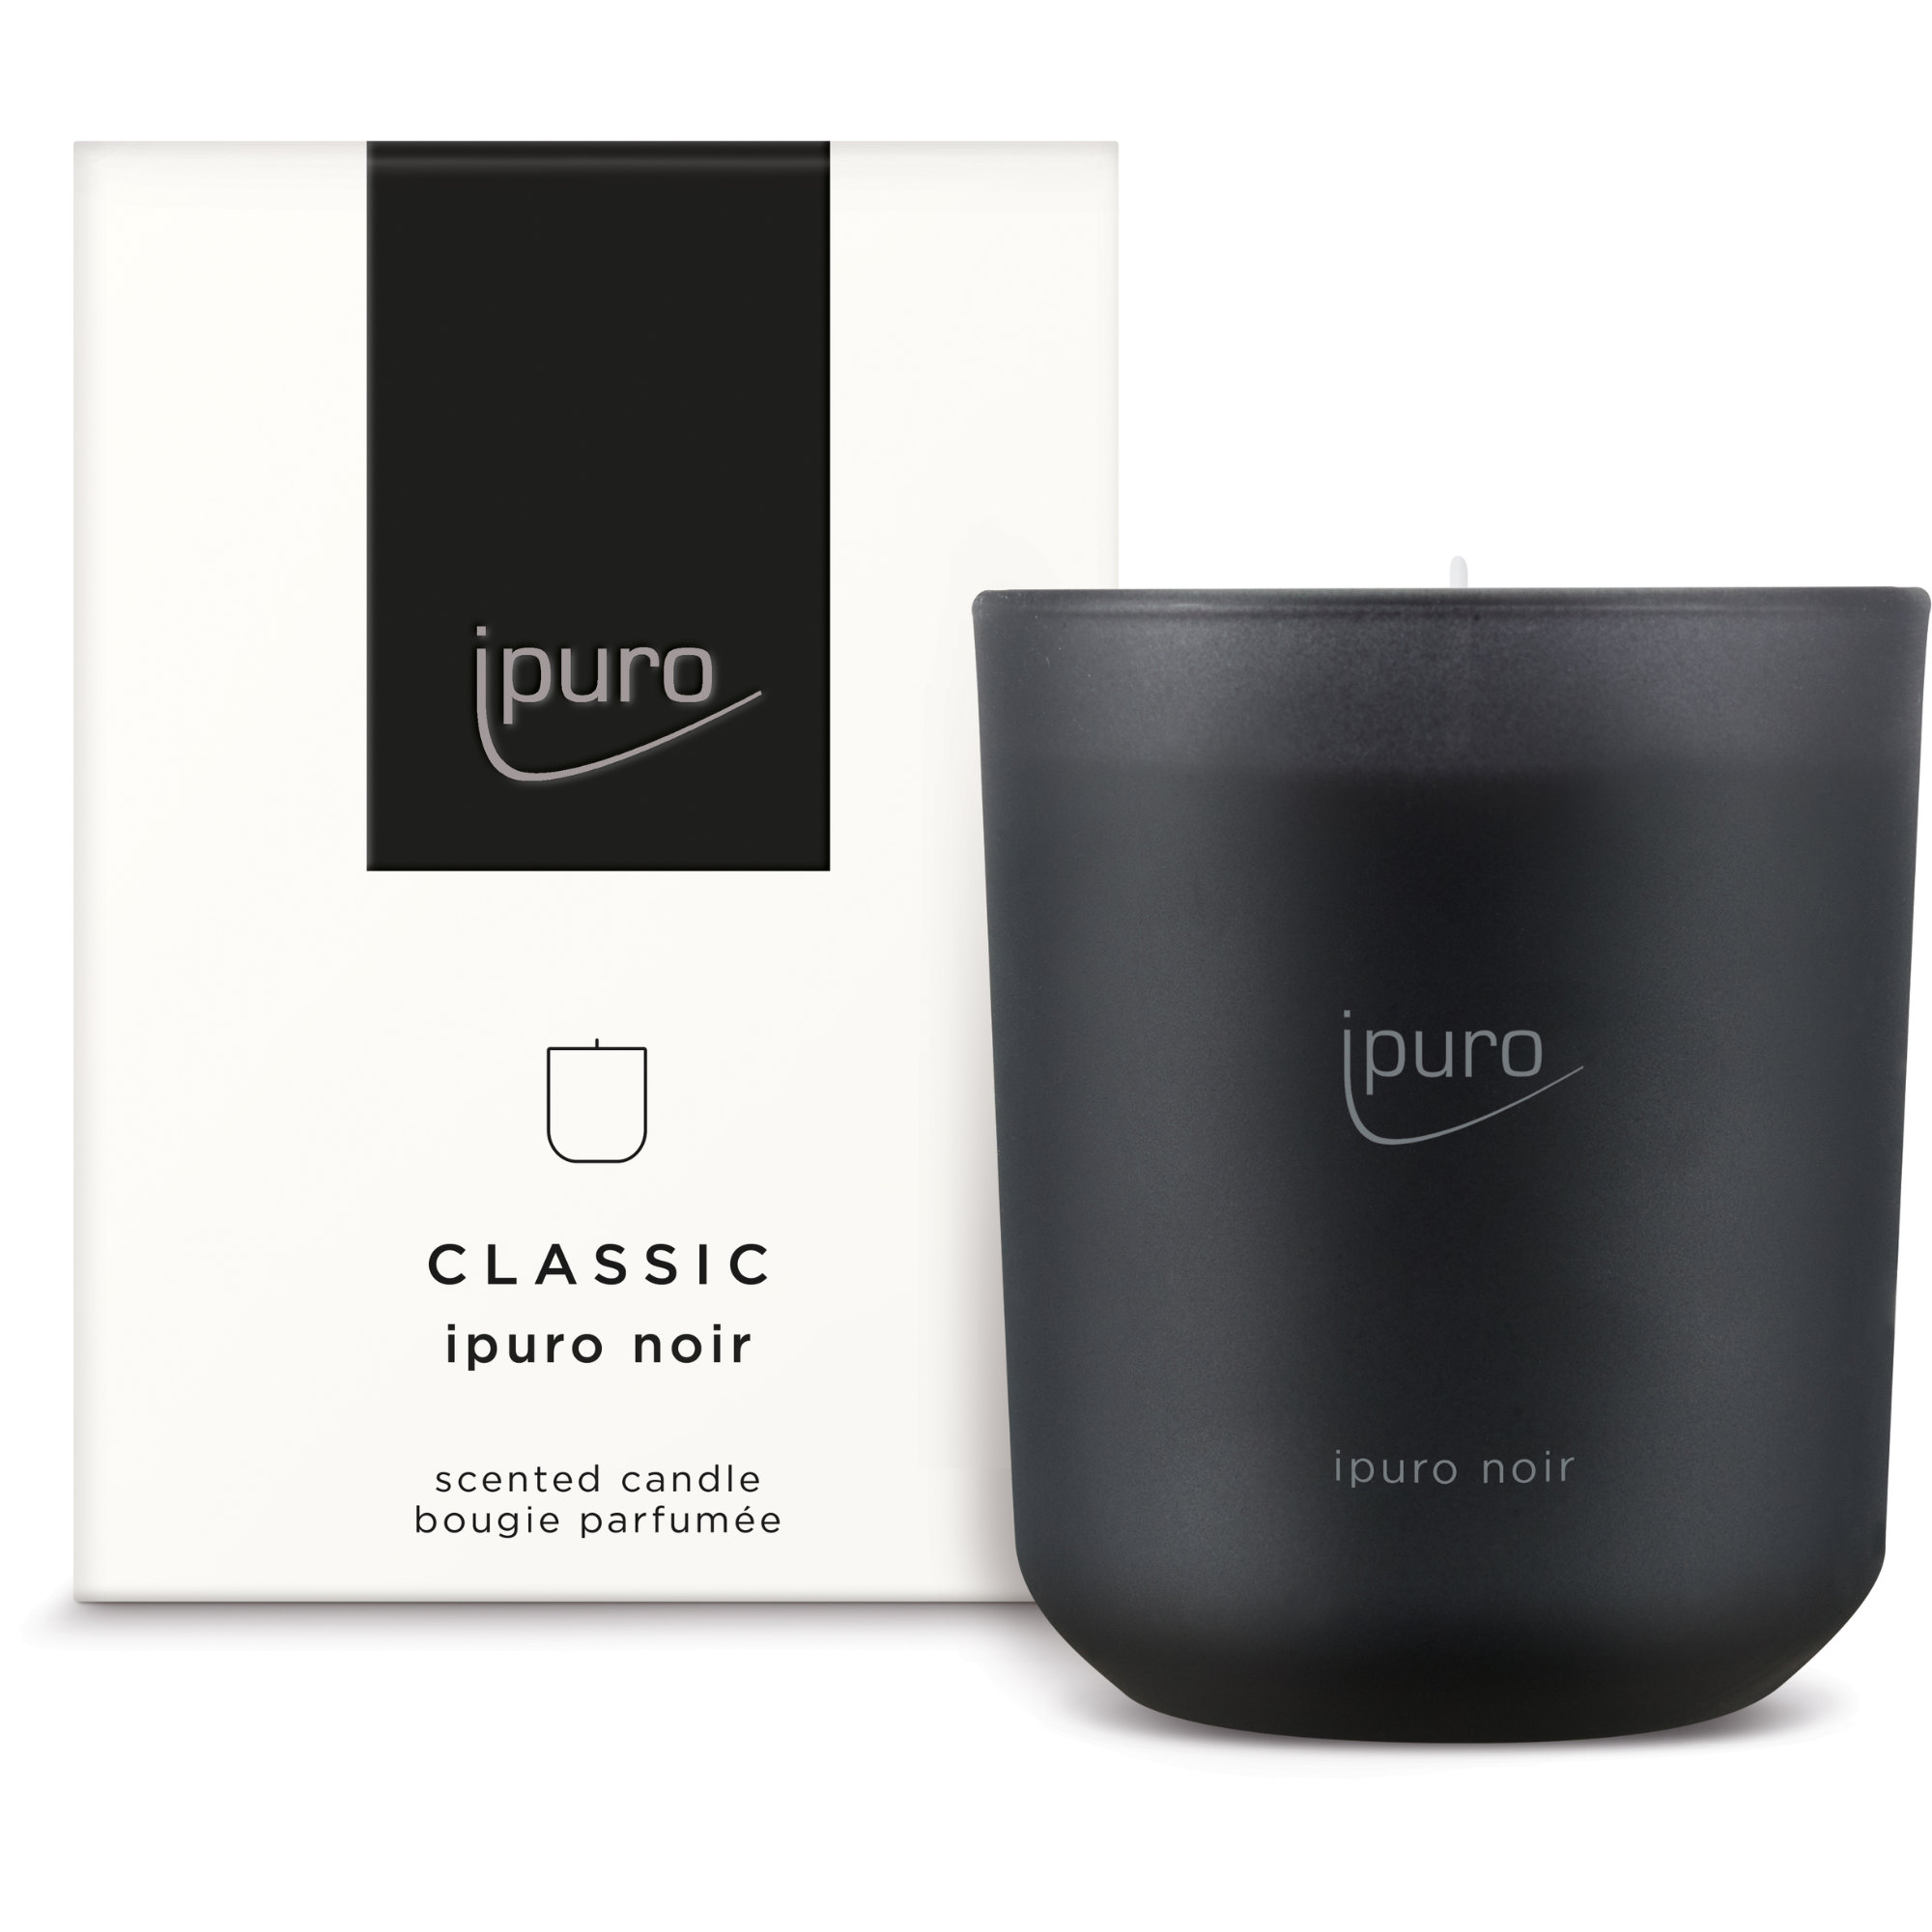 ipuro Classic noir Duftkerze, 270gr - Jetzt online kaufen